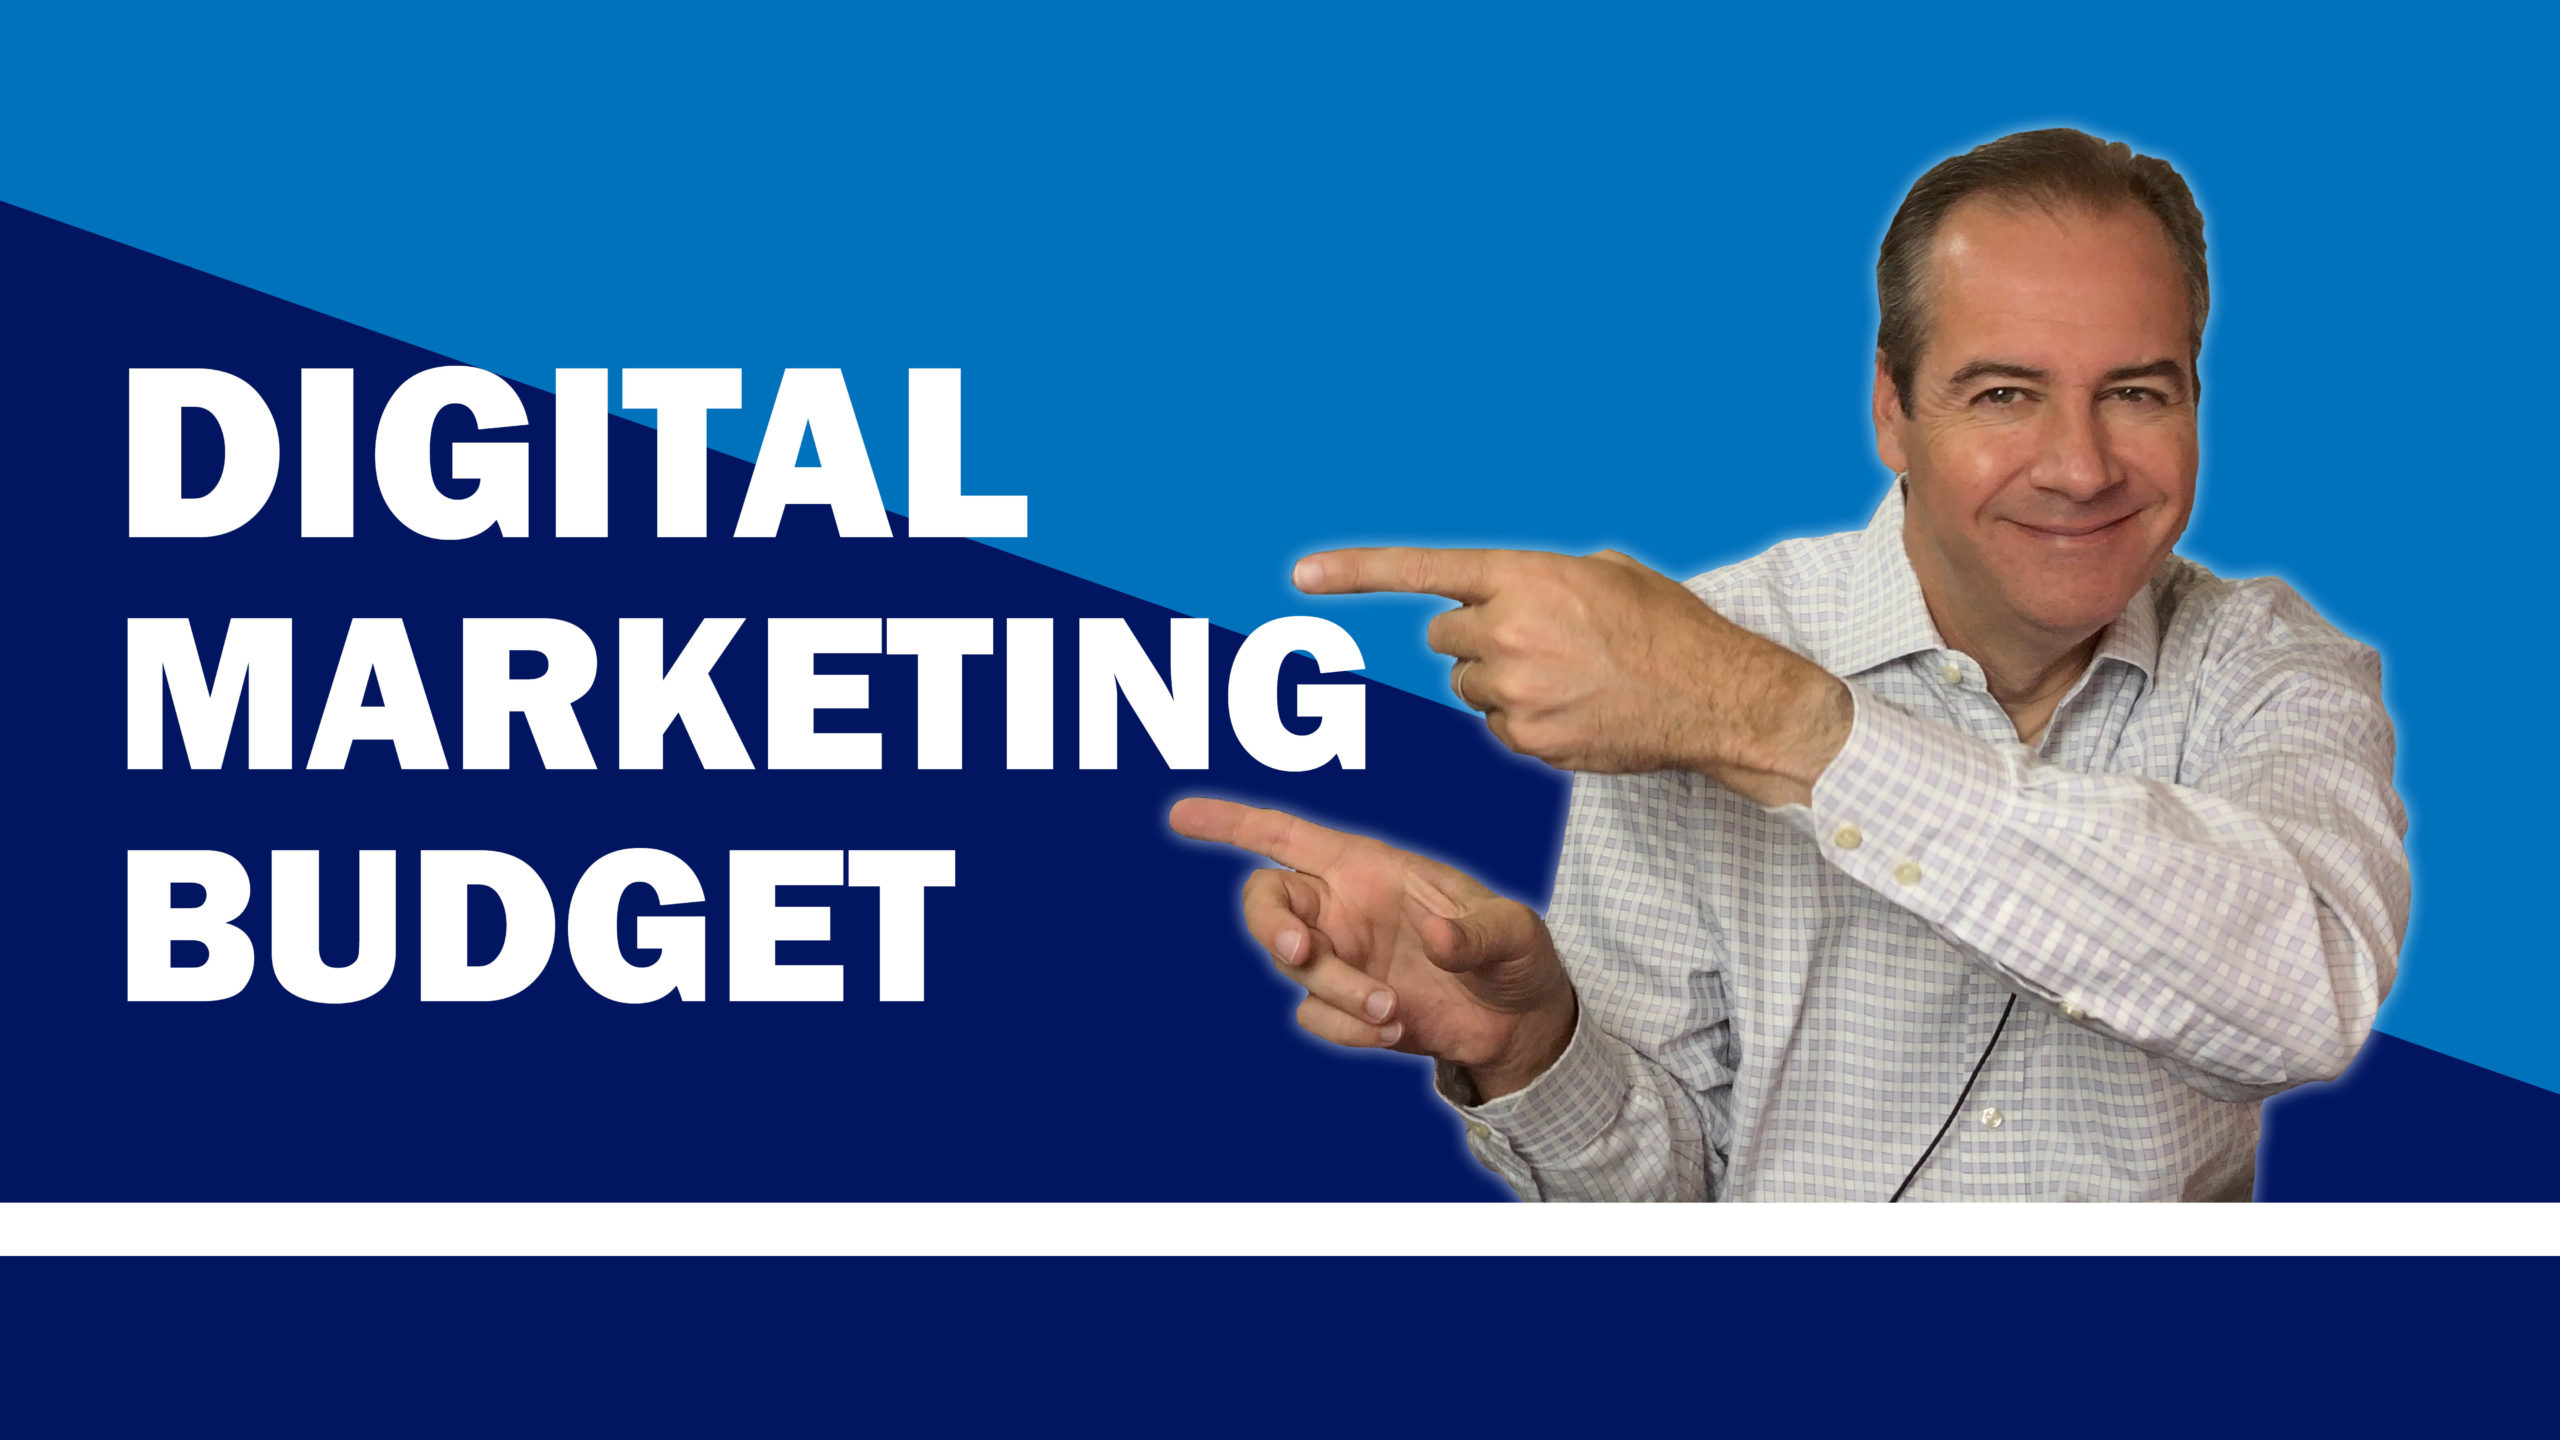 Setting a Digital Marketing Budget